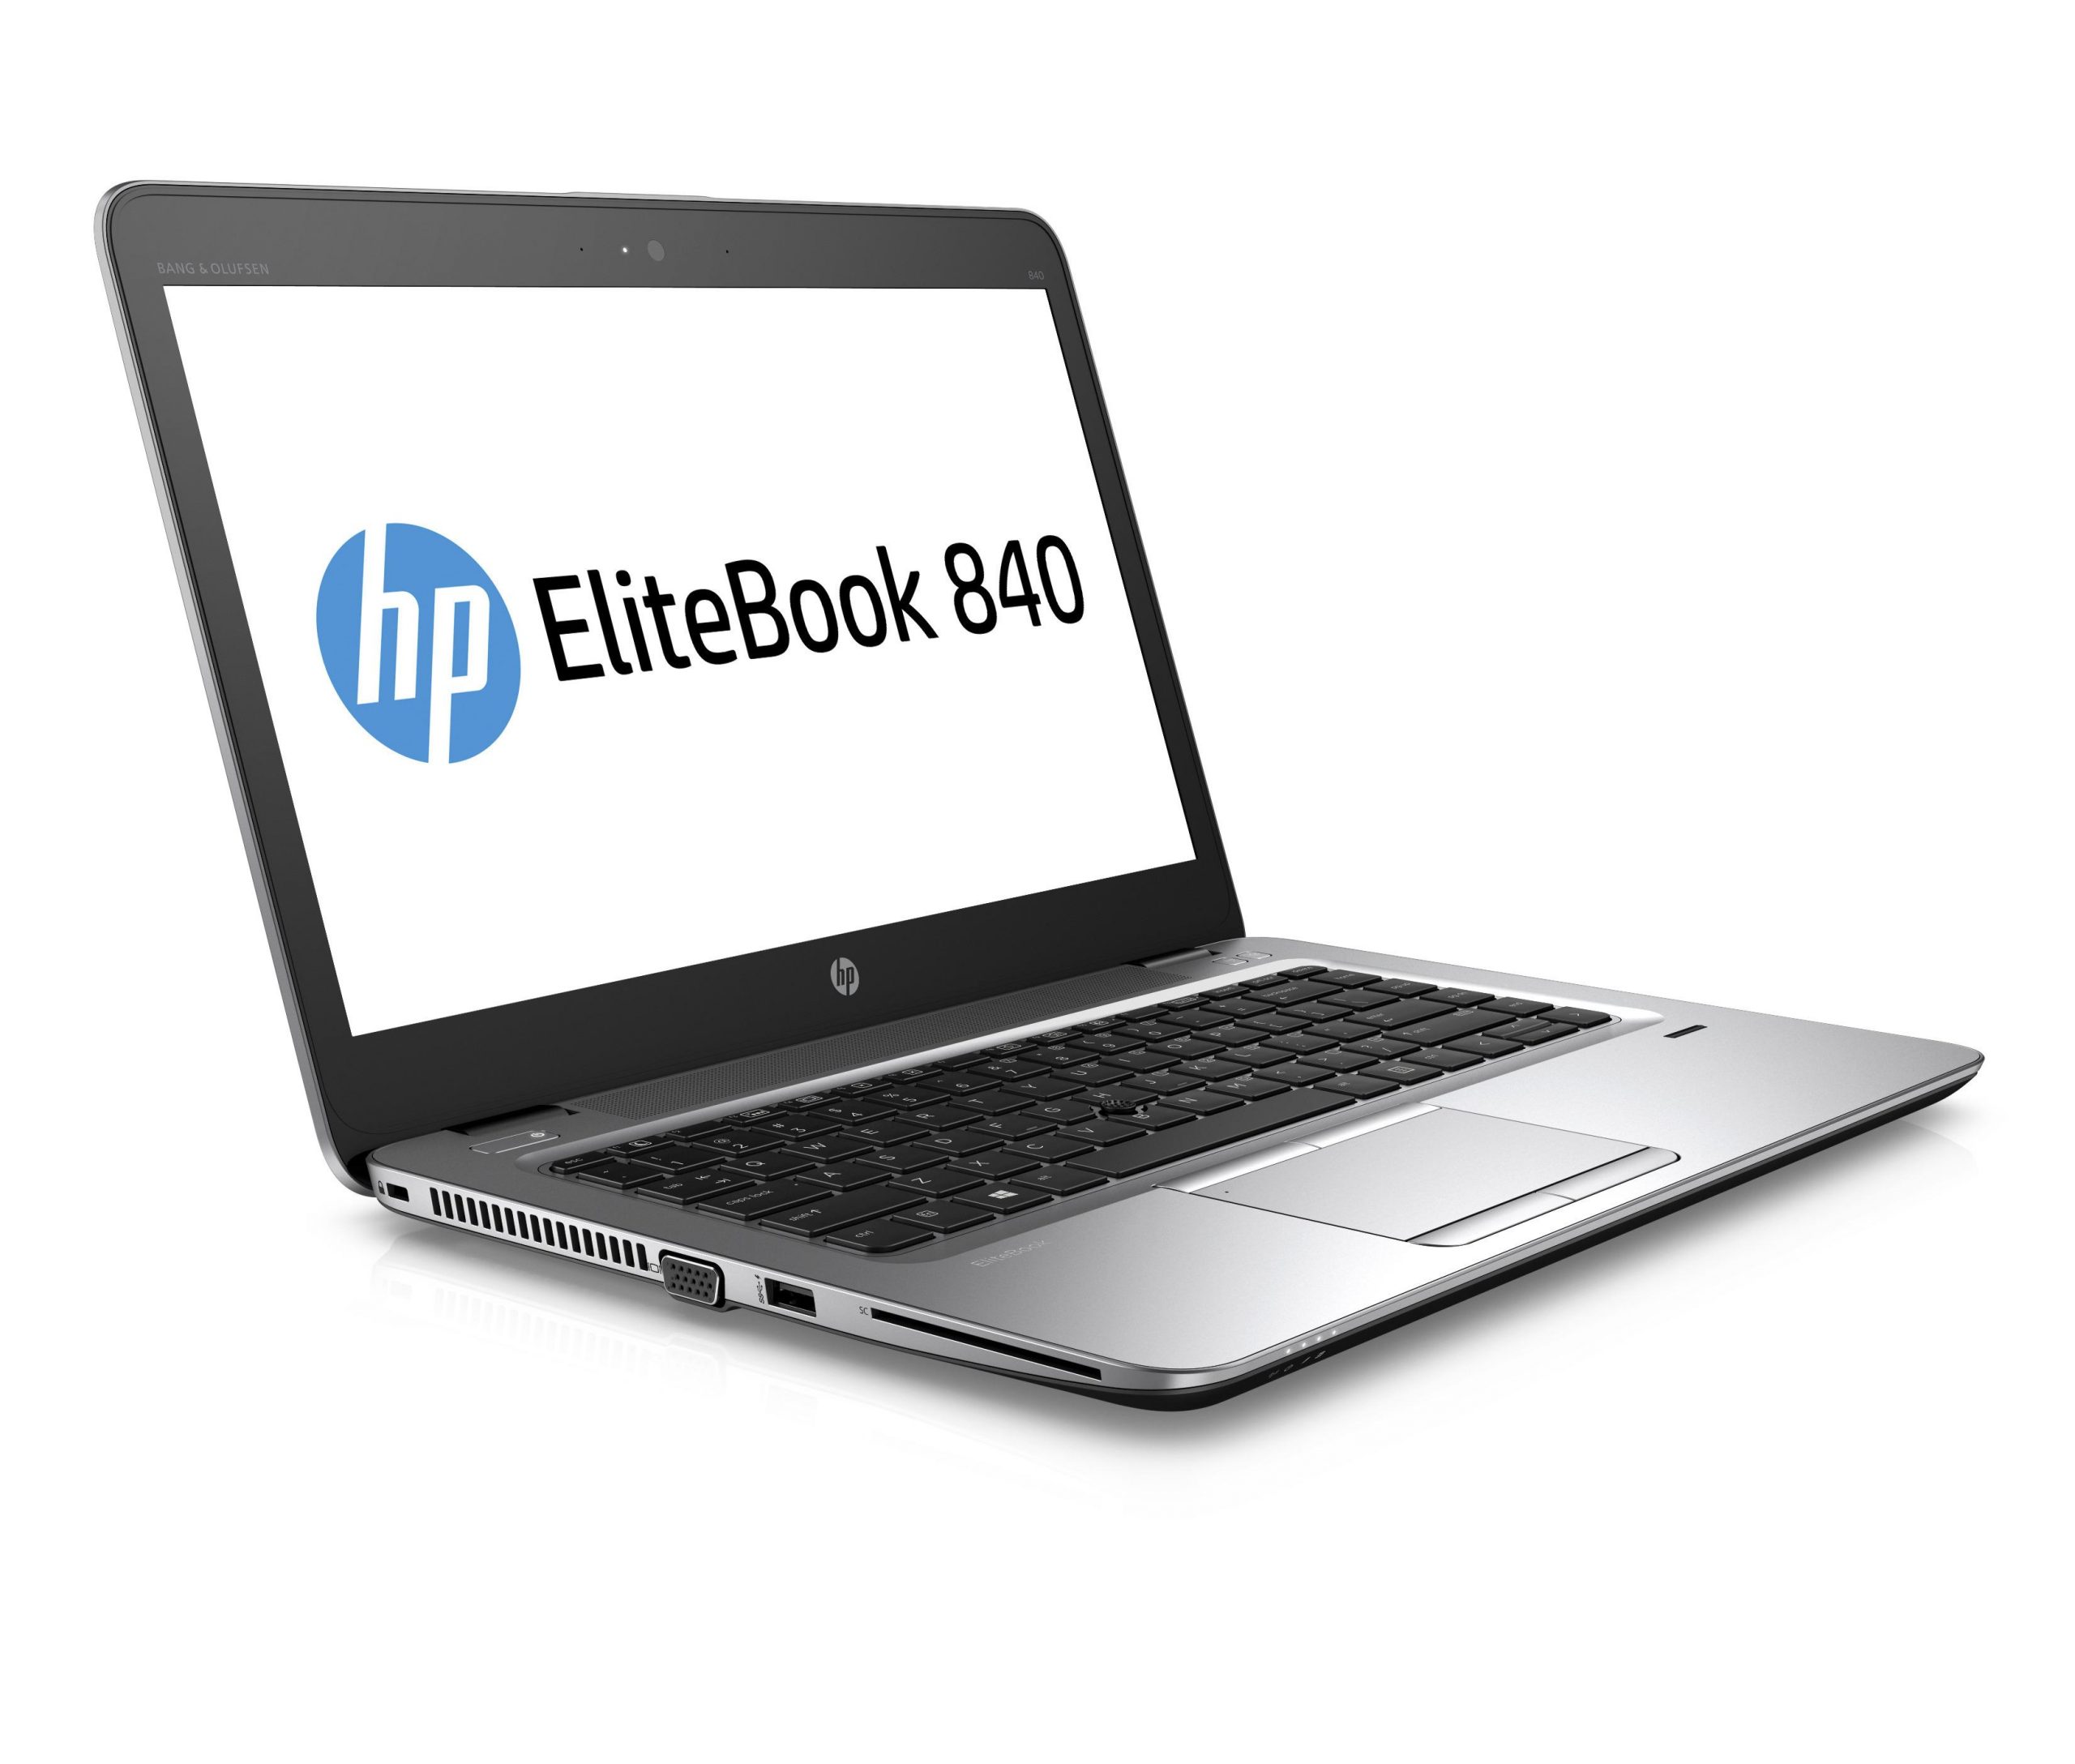 HP Elitebook 840 G3 i5 6th gen 2.40GHz/8GB/128GB SSD